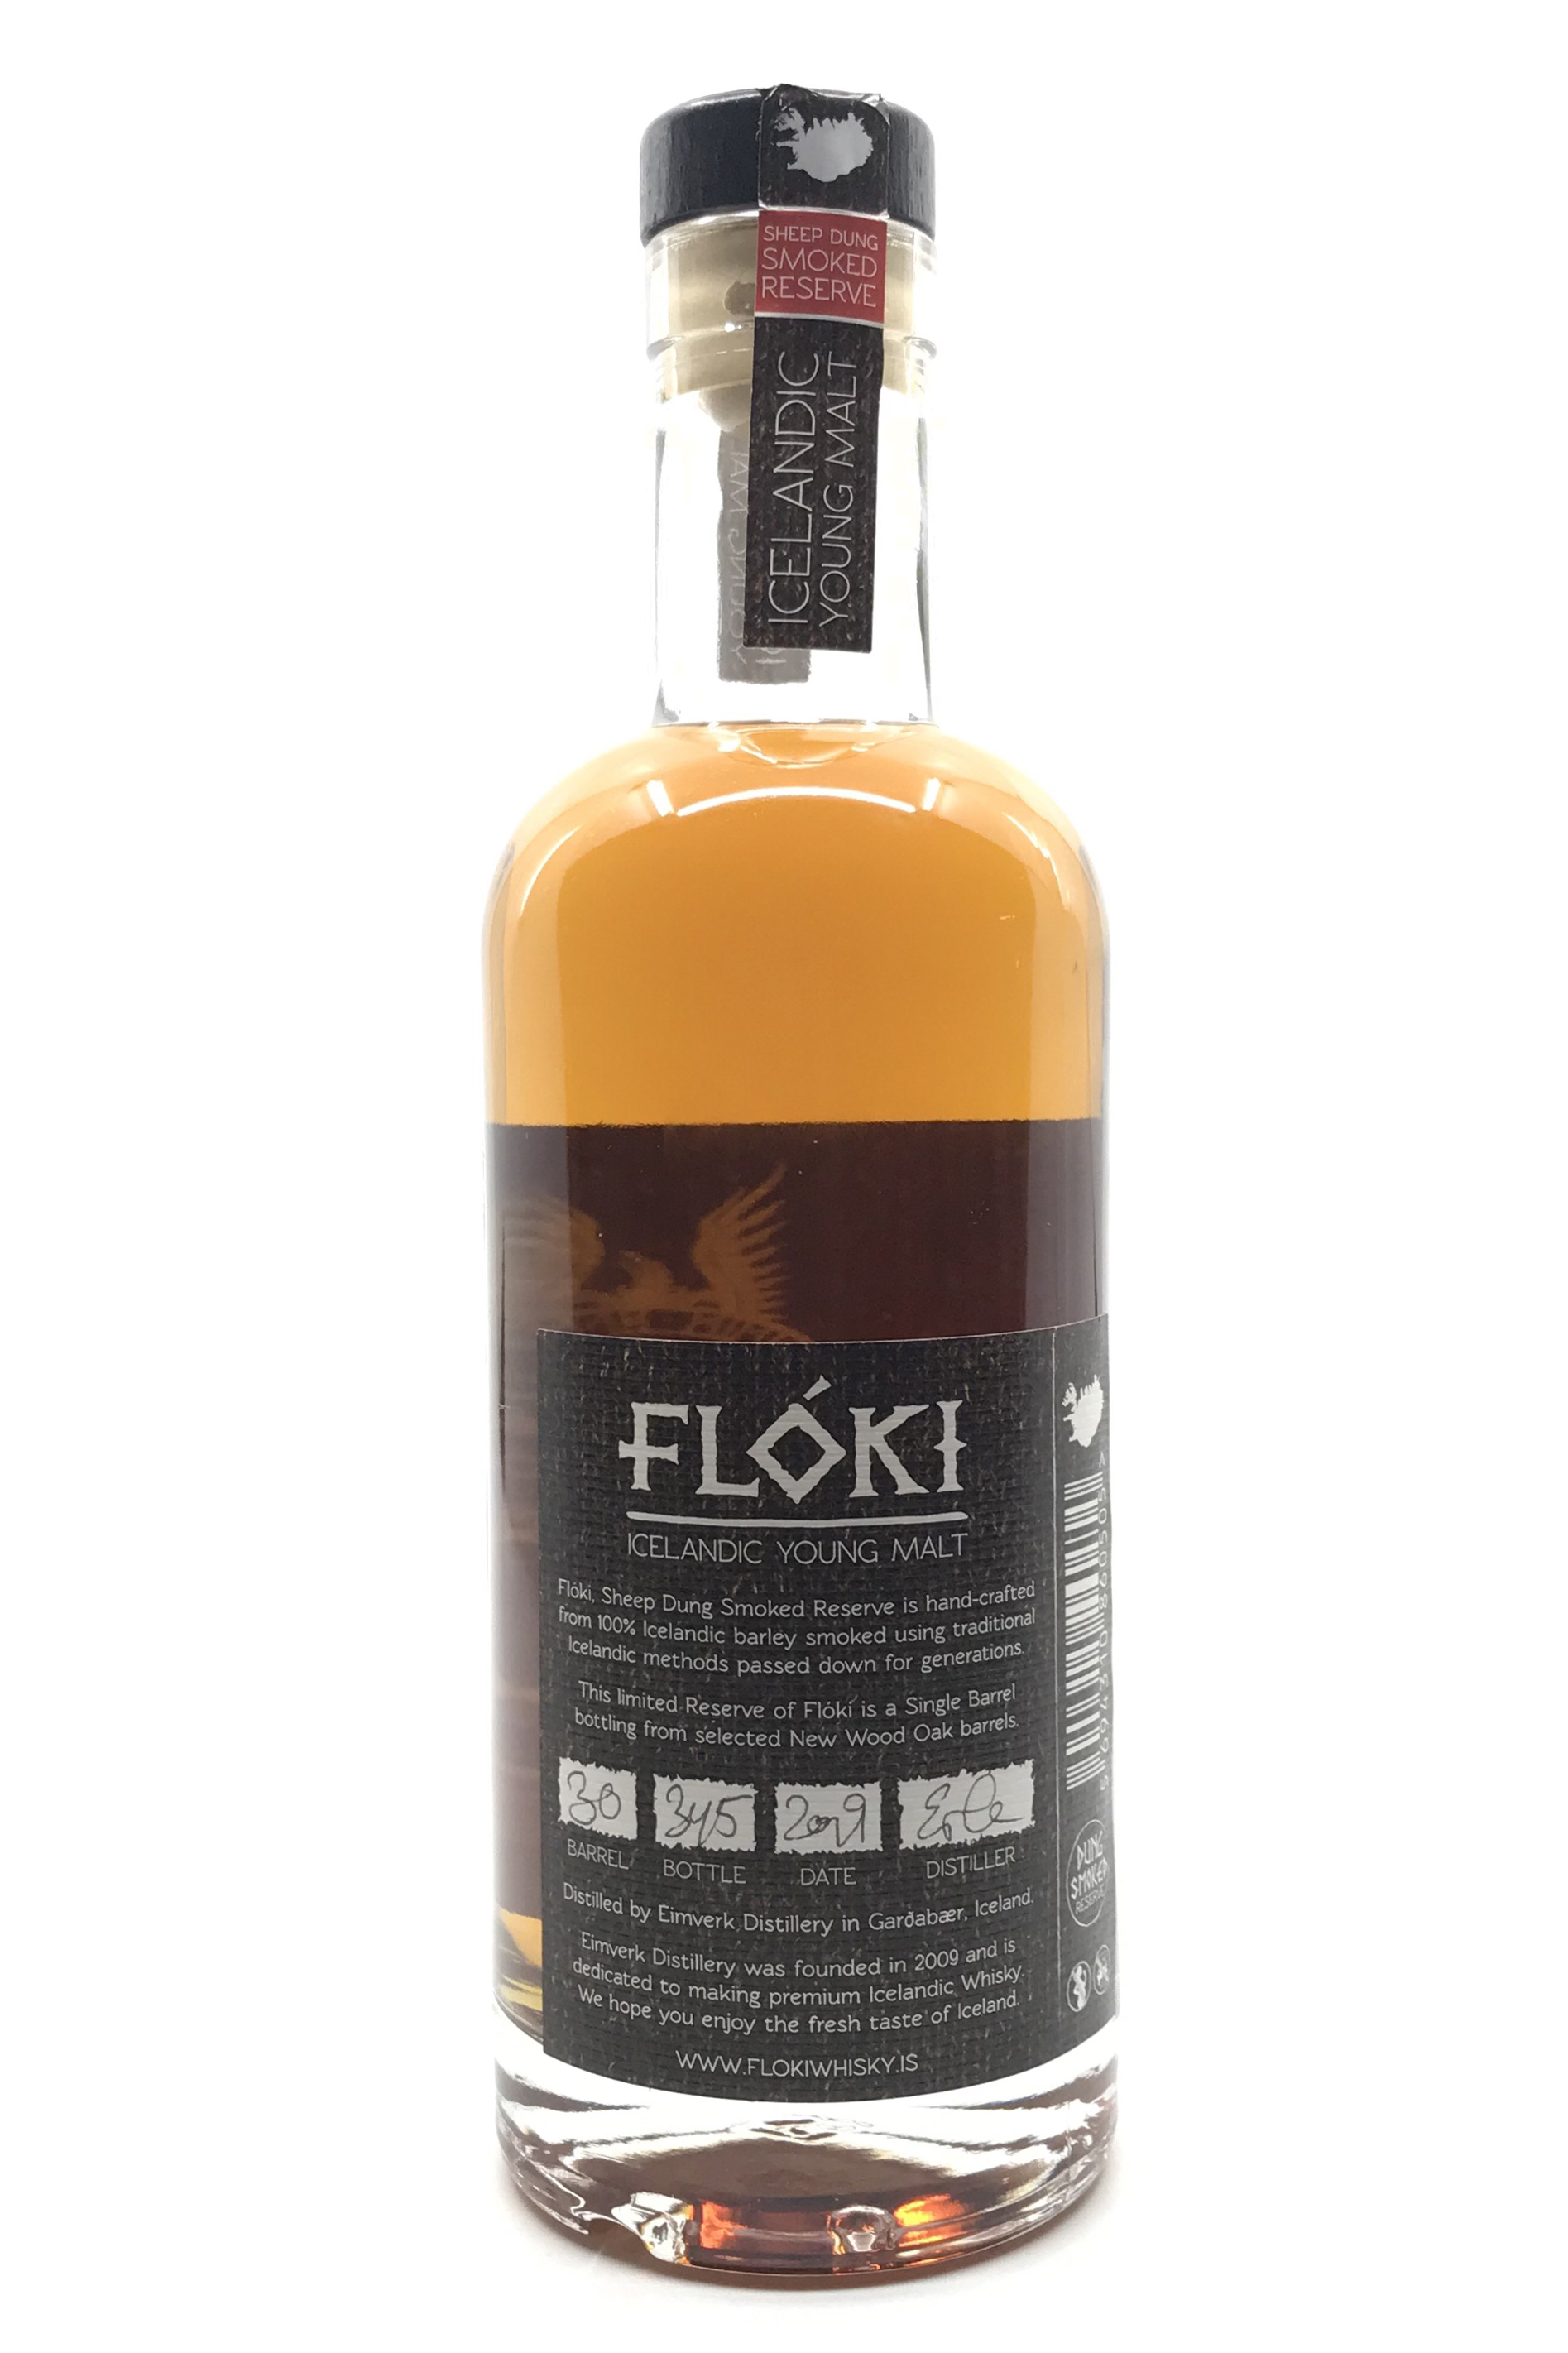 Floki Icelandic Sheep Dung Young Malt Whisky - 47% vol. Alk. - 0,5l - Whisky aus Island - Back